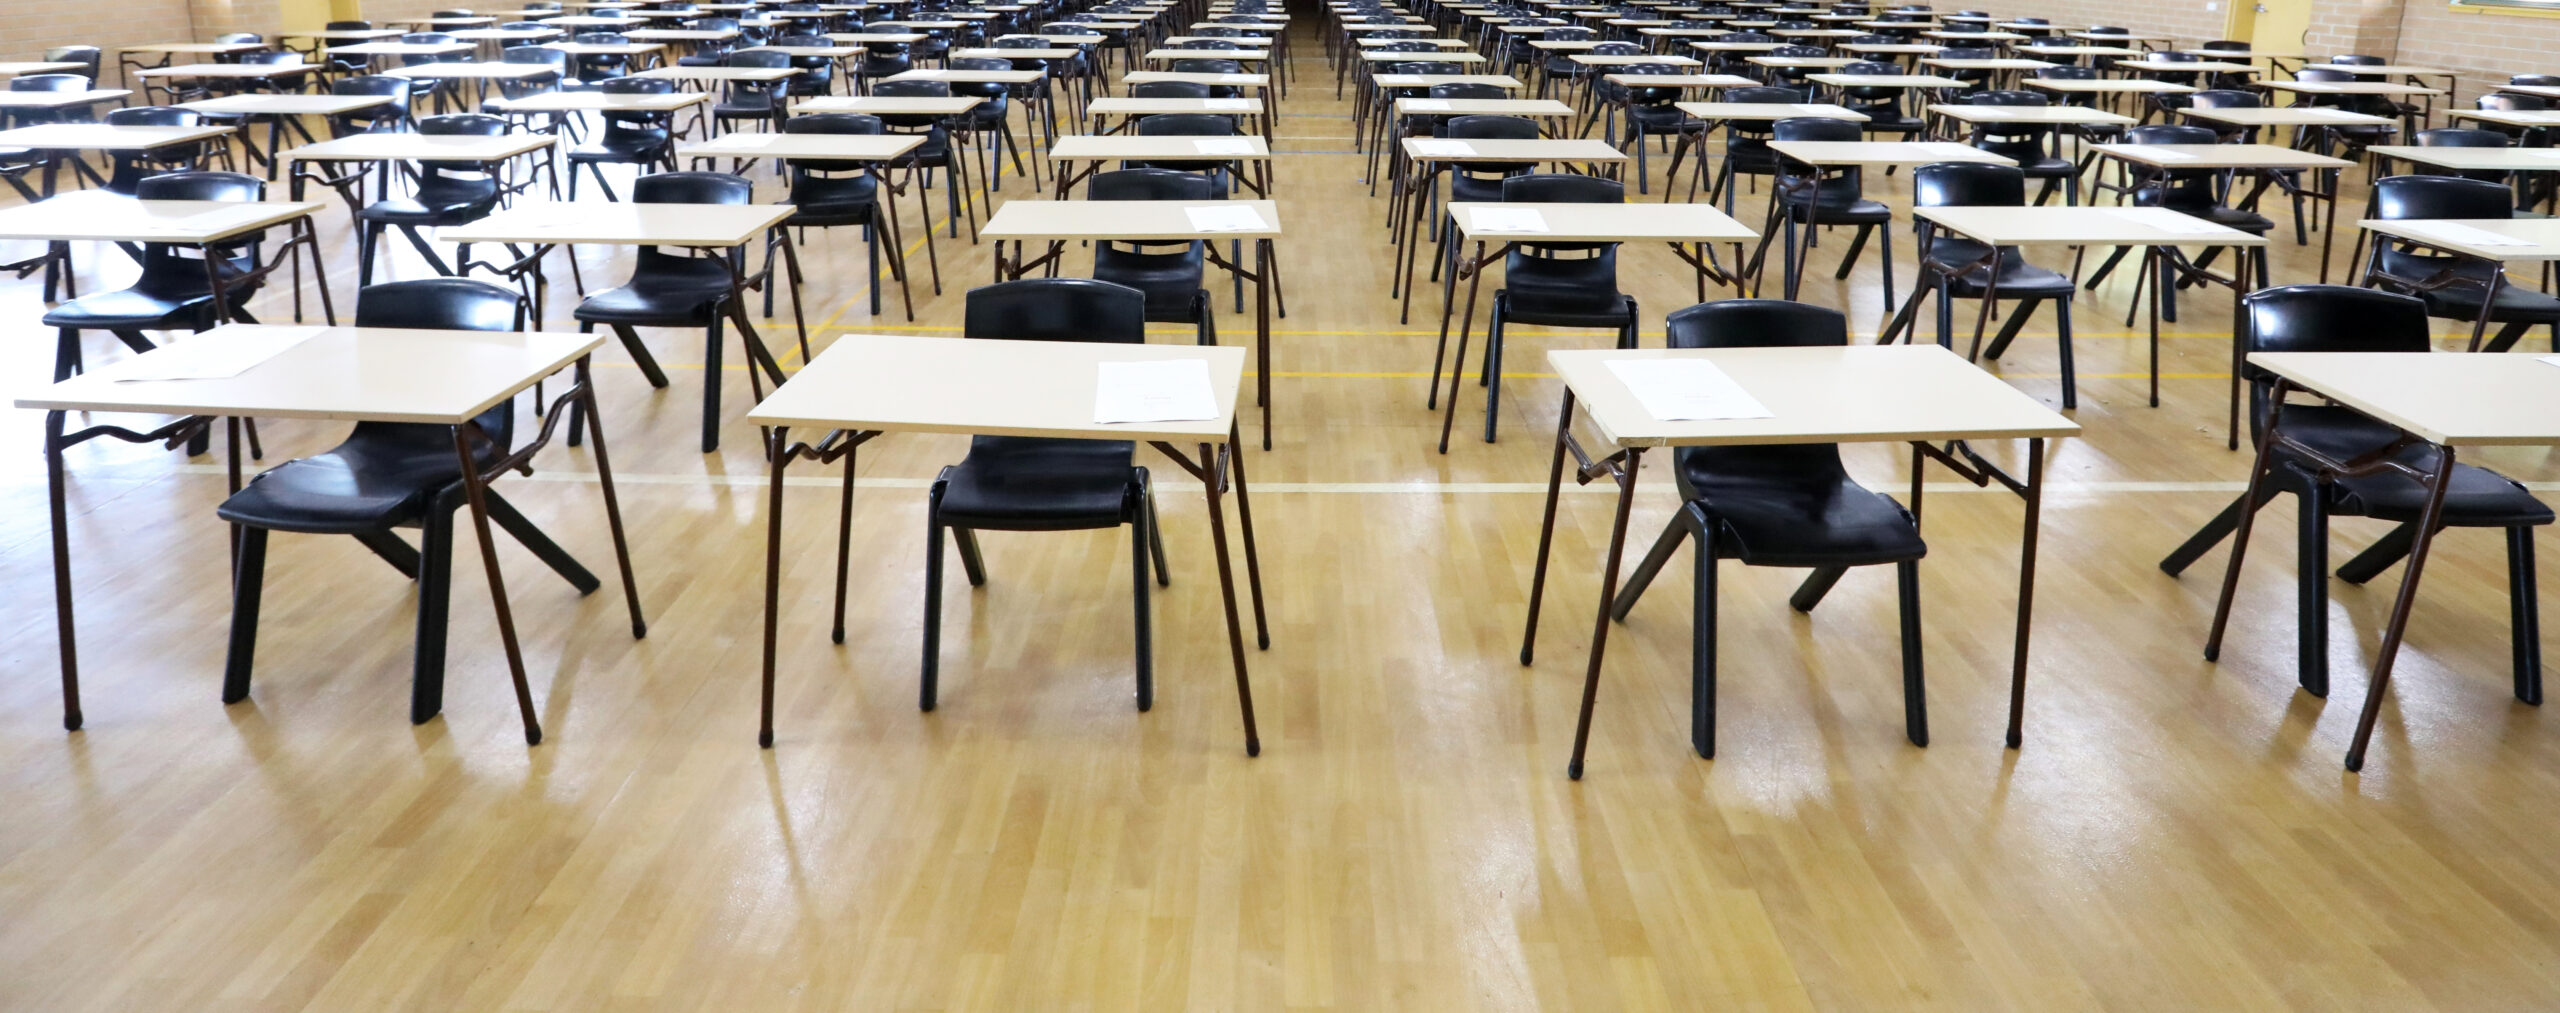 HSC markers exam room with empty desks